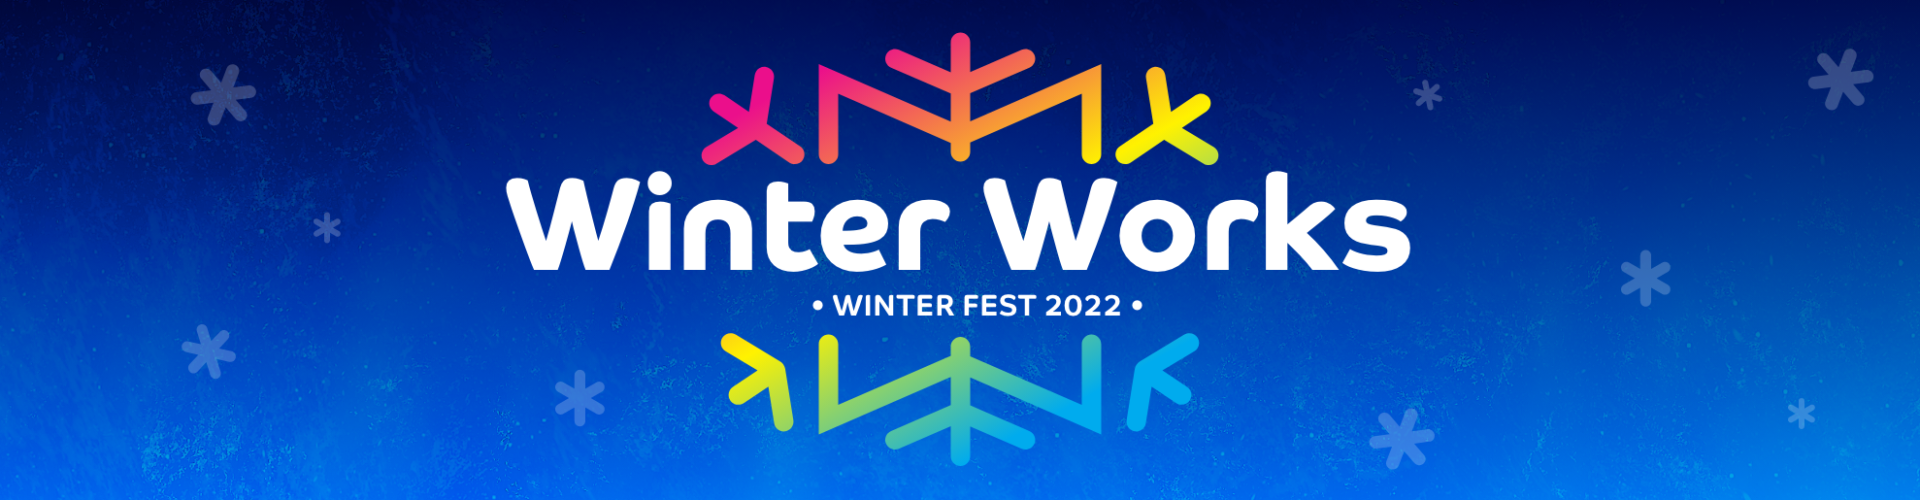 Winter Works, a Downtown Windsor Winter Fest 2022